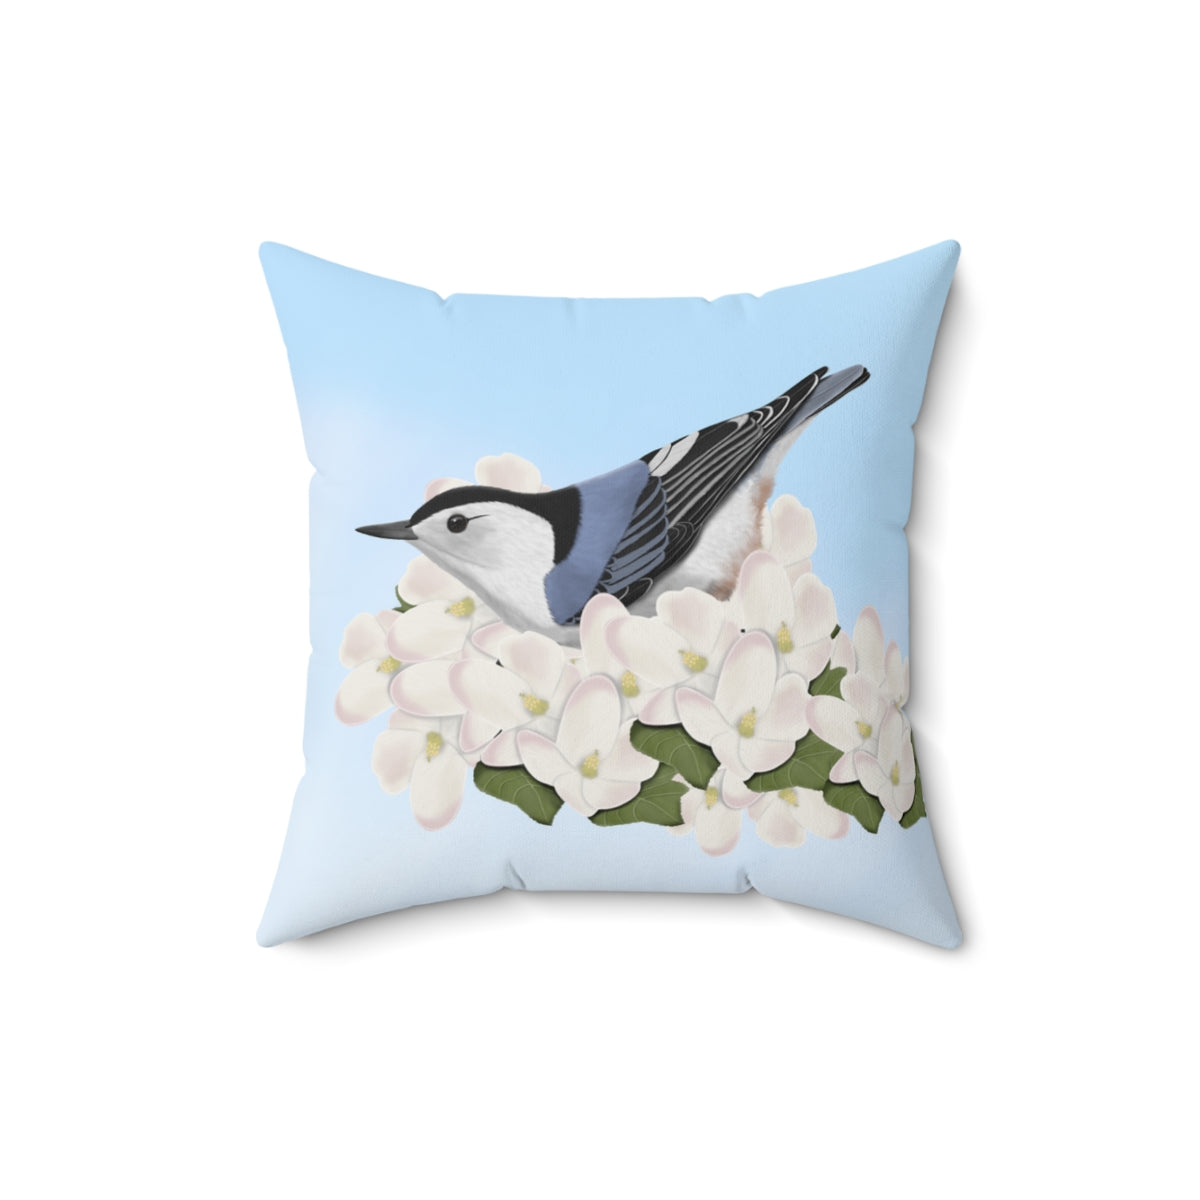 bird art throw pillows with spring blossoms